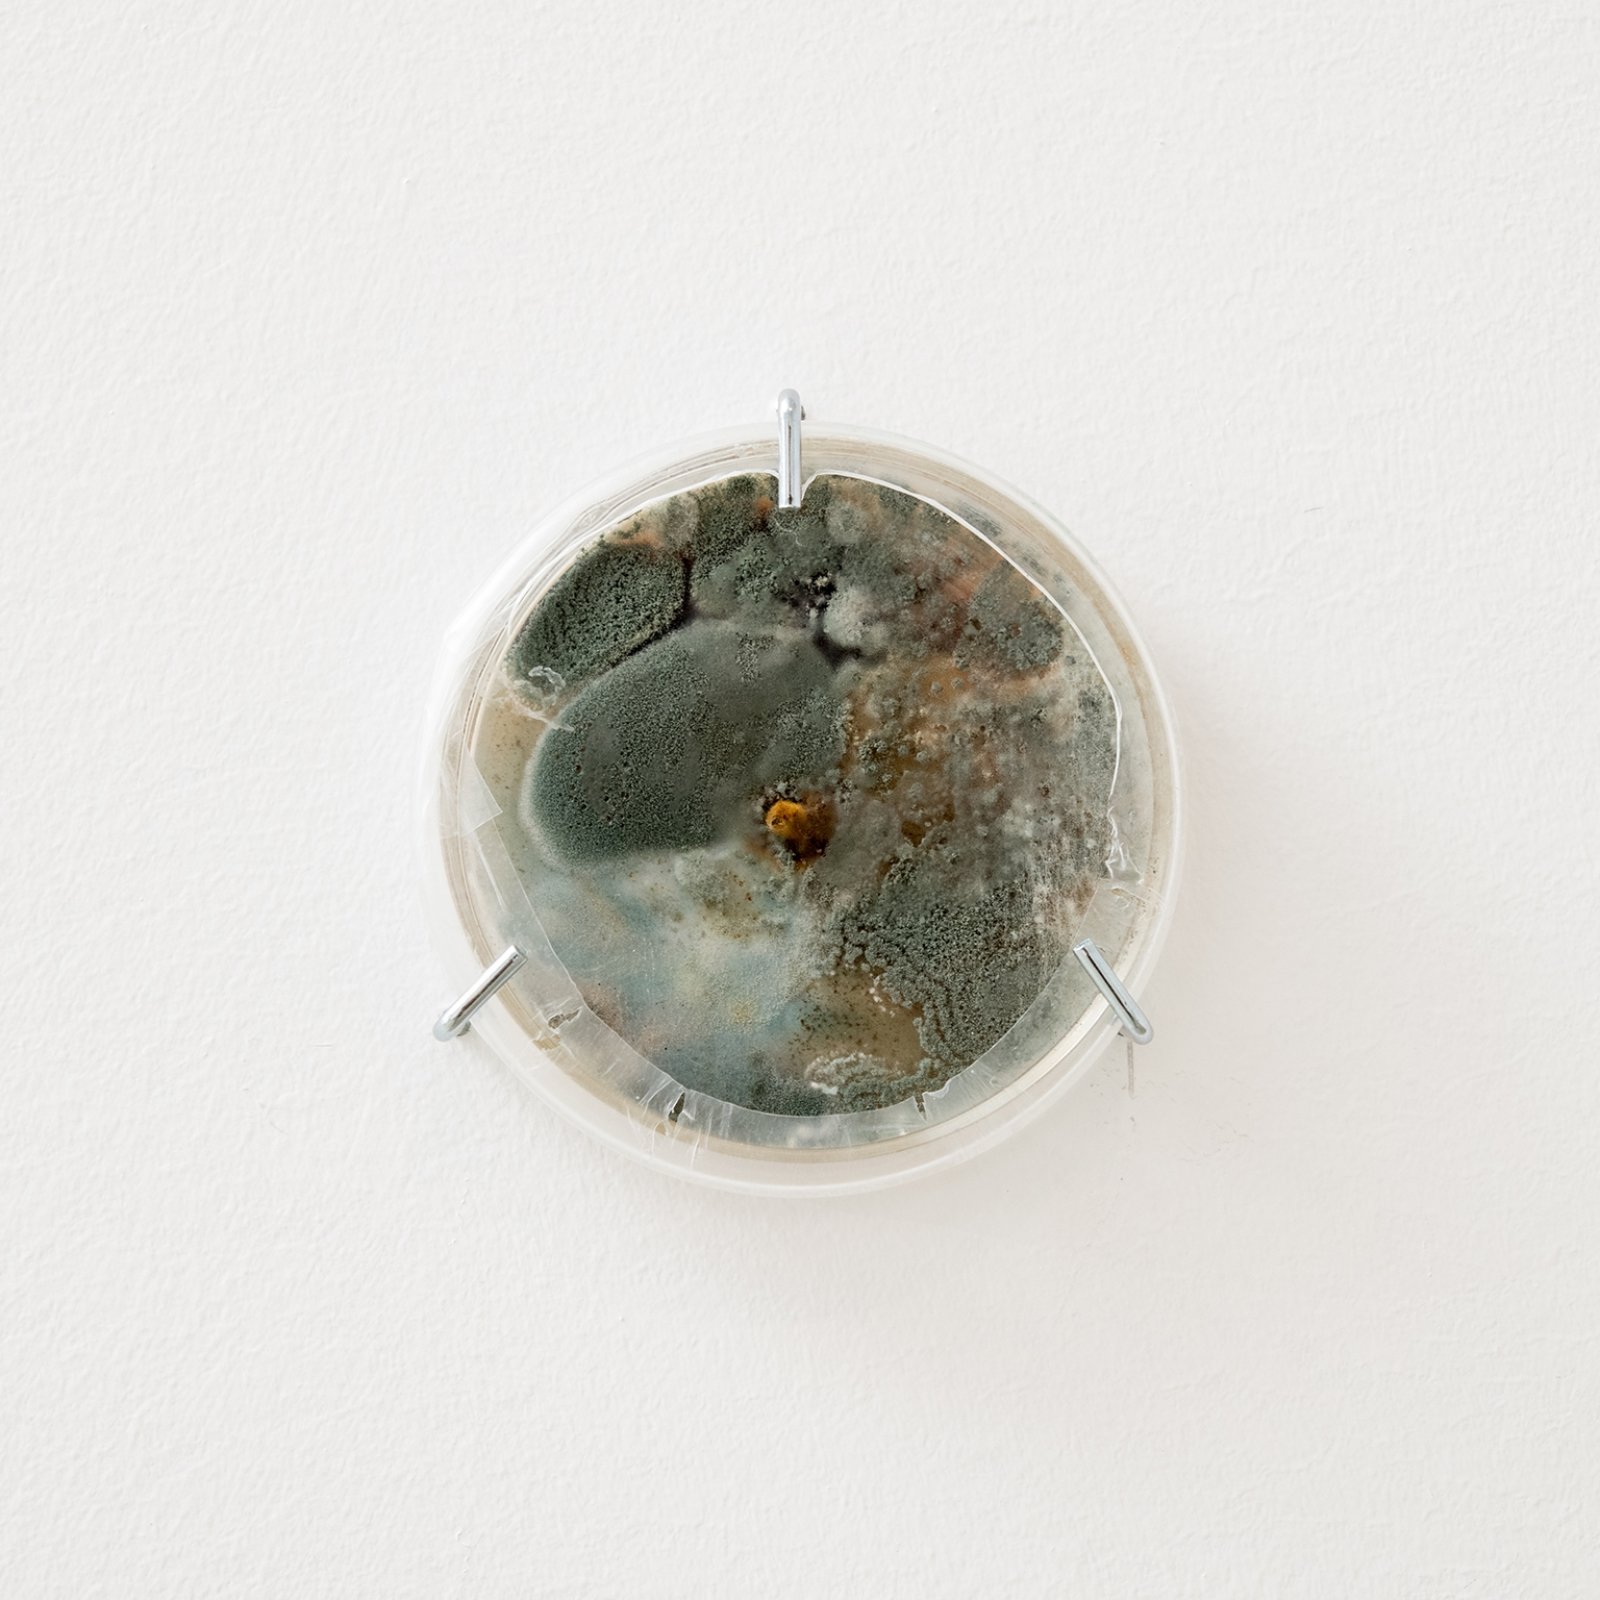 Kasper Feyrer, Cultures, 2019, c-print, pyrex petri dish, agar, malt, yeast, Phellinus igniarius mycelium (willow bracket), contaminants, 9 components, each 4 x 4 x 1 in. (10 x 10 x 3 cm)